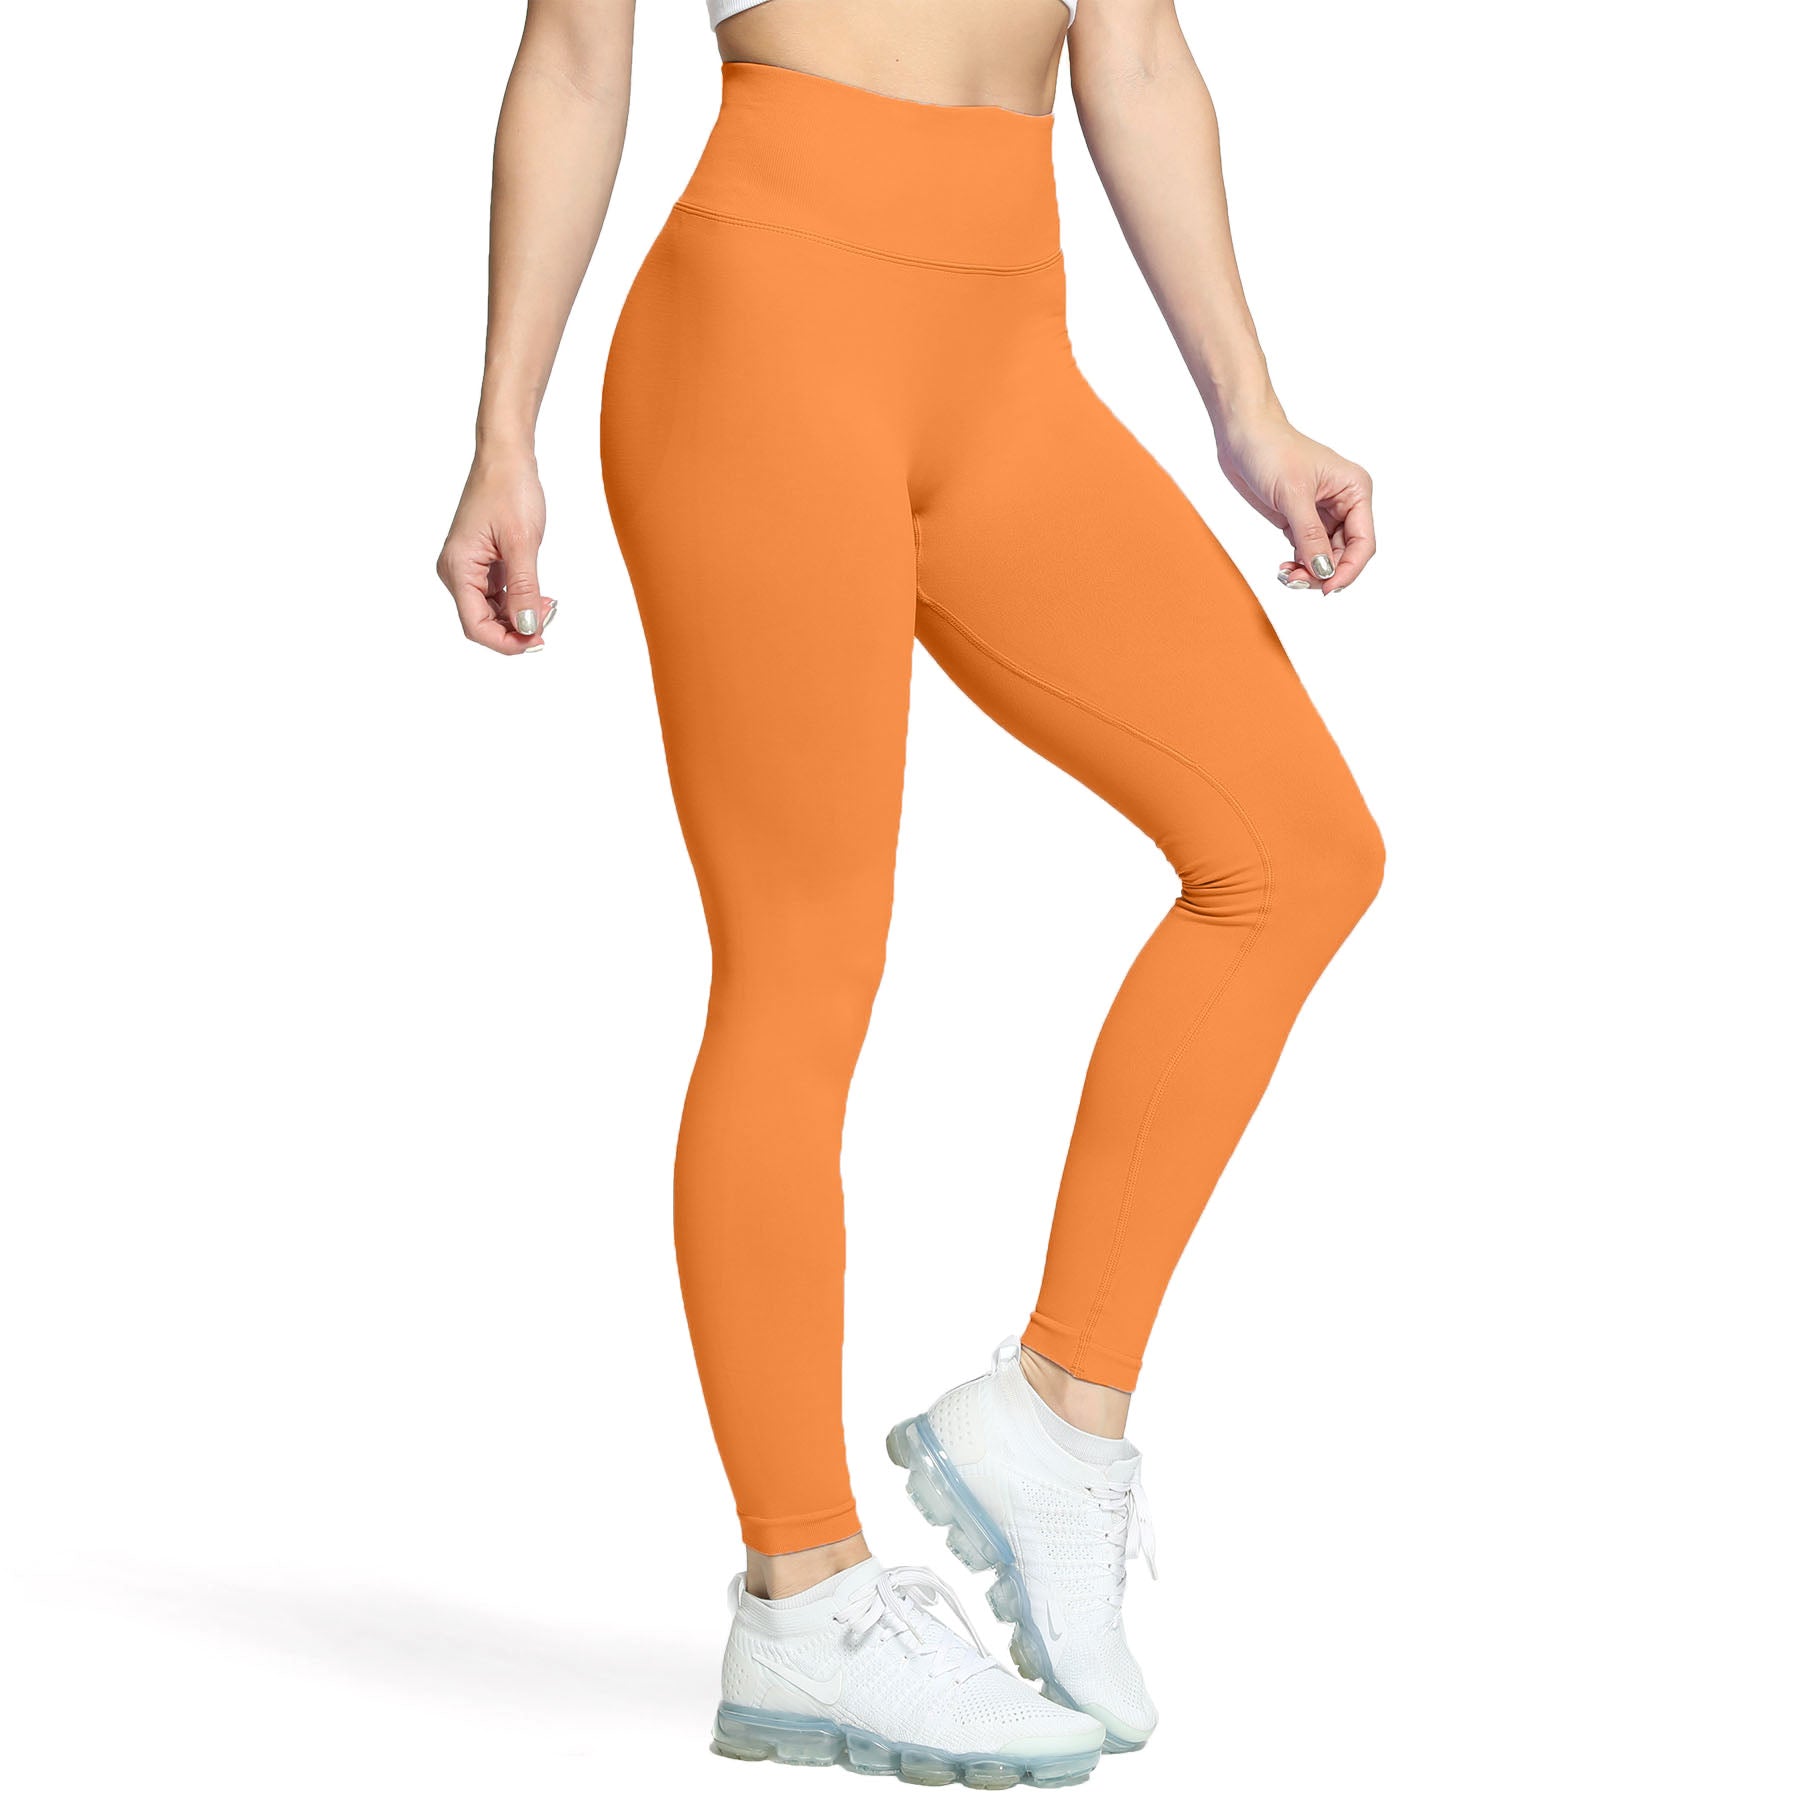 BAT LEGGINGS Women's Leggings Orange and Black Bat Print Leggings for  HALLOWEEN Yoga Pants Yoga Leggings Adult and Plus Sizes Available - Etsy